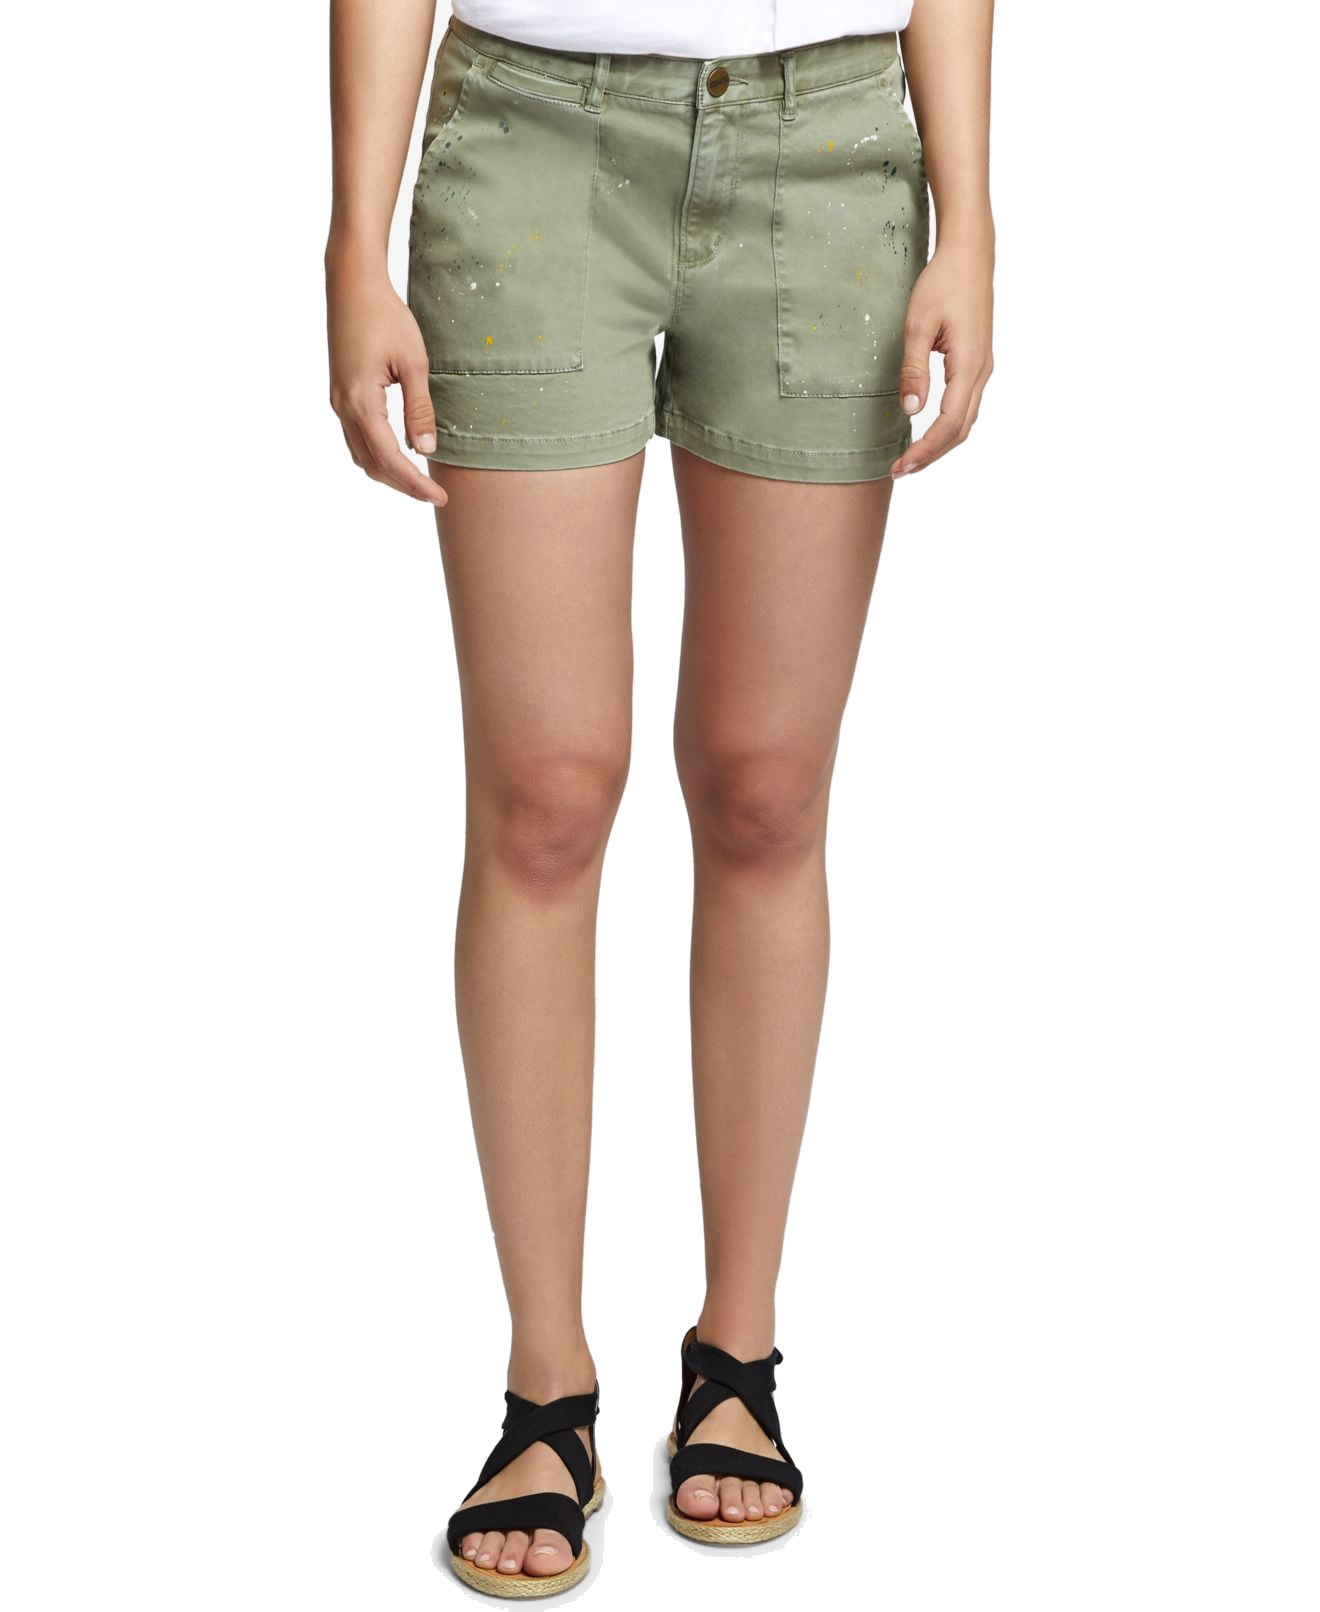 Sanctuary Shorts - Women's Splatter Khaki Chino Shorts 29 - Walmart.com